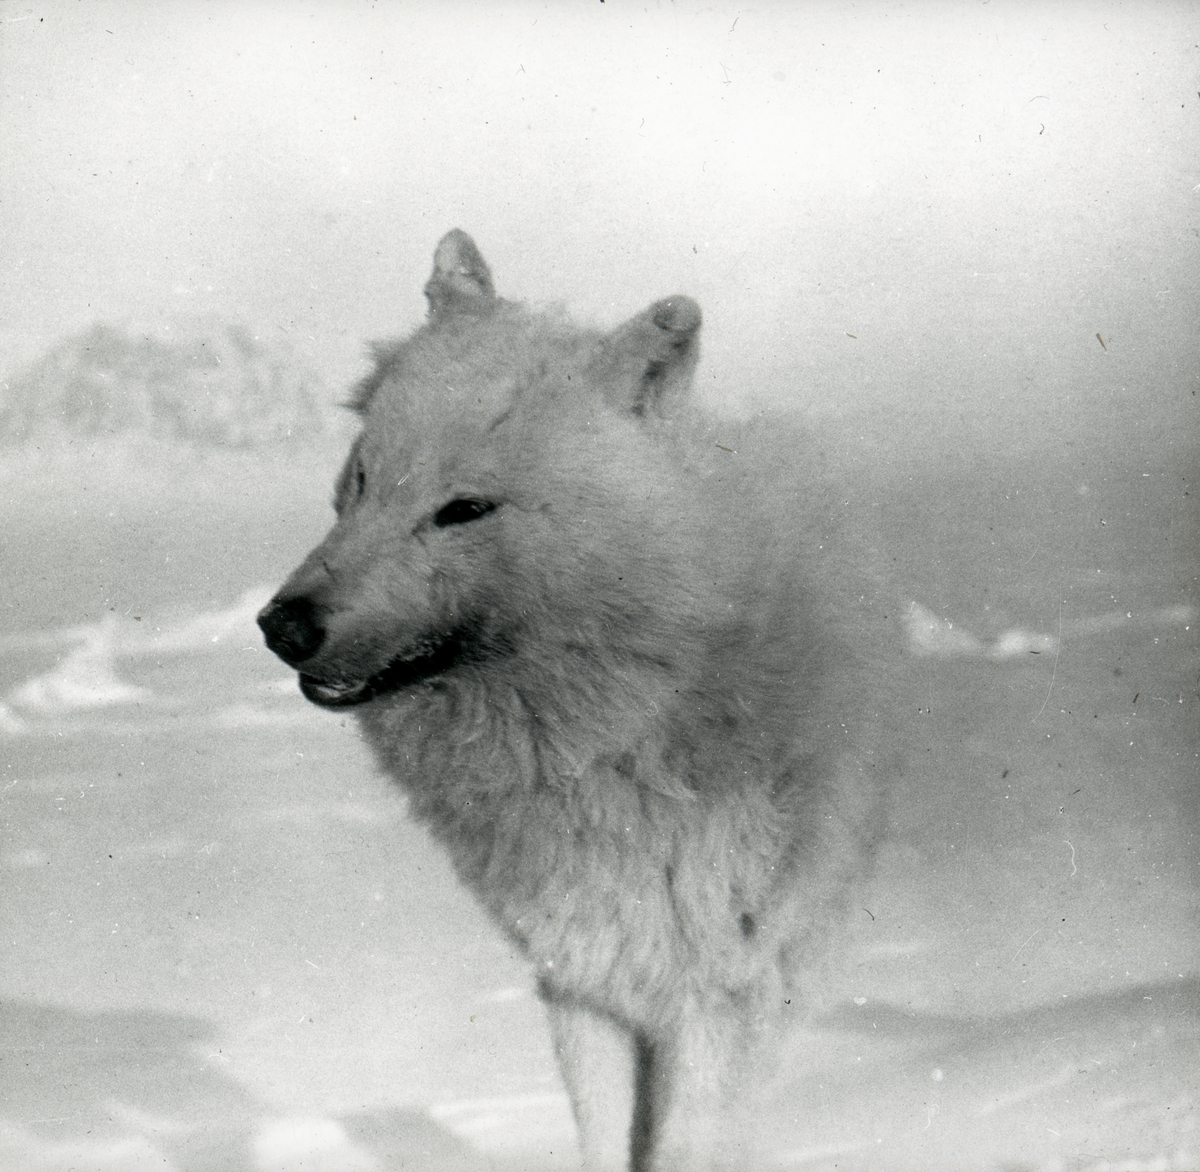 Motiv av en arktisk ulv / polarulv.